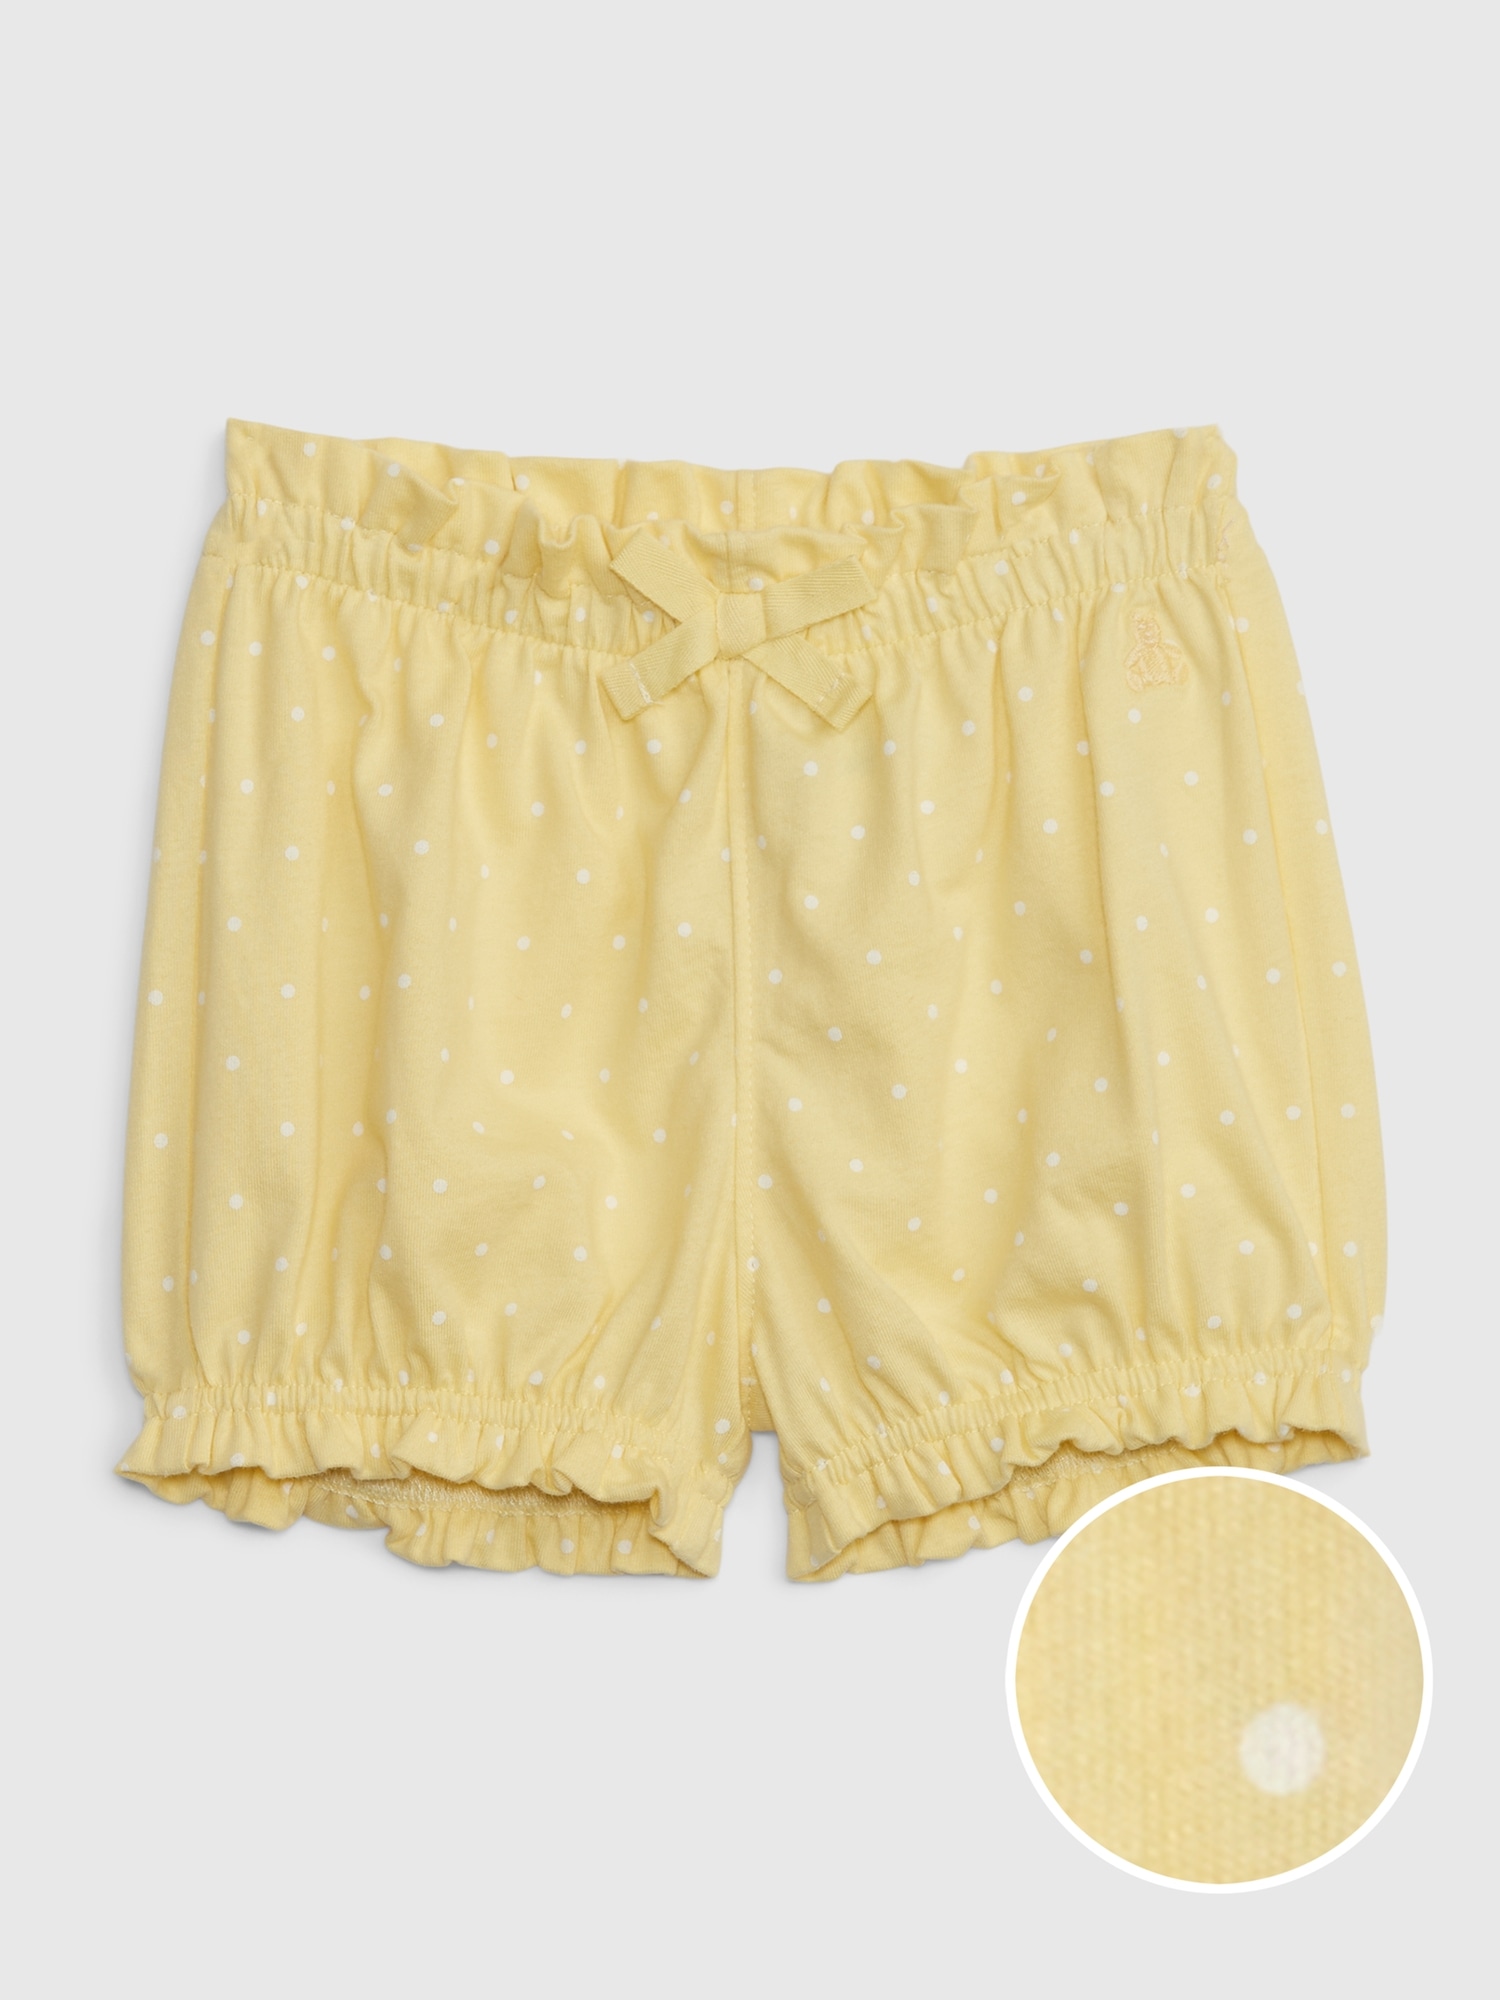 Gap Baby 100% Organic Cotton Mix and Match Pull-On Shorts